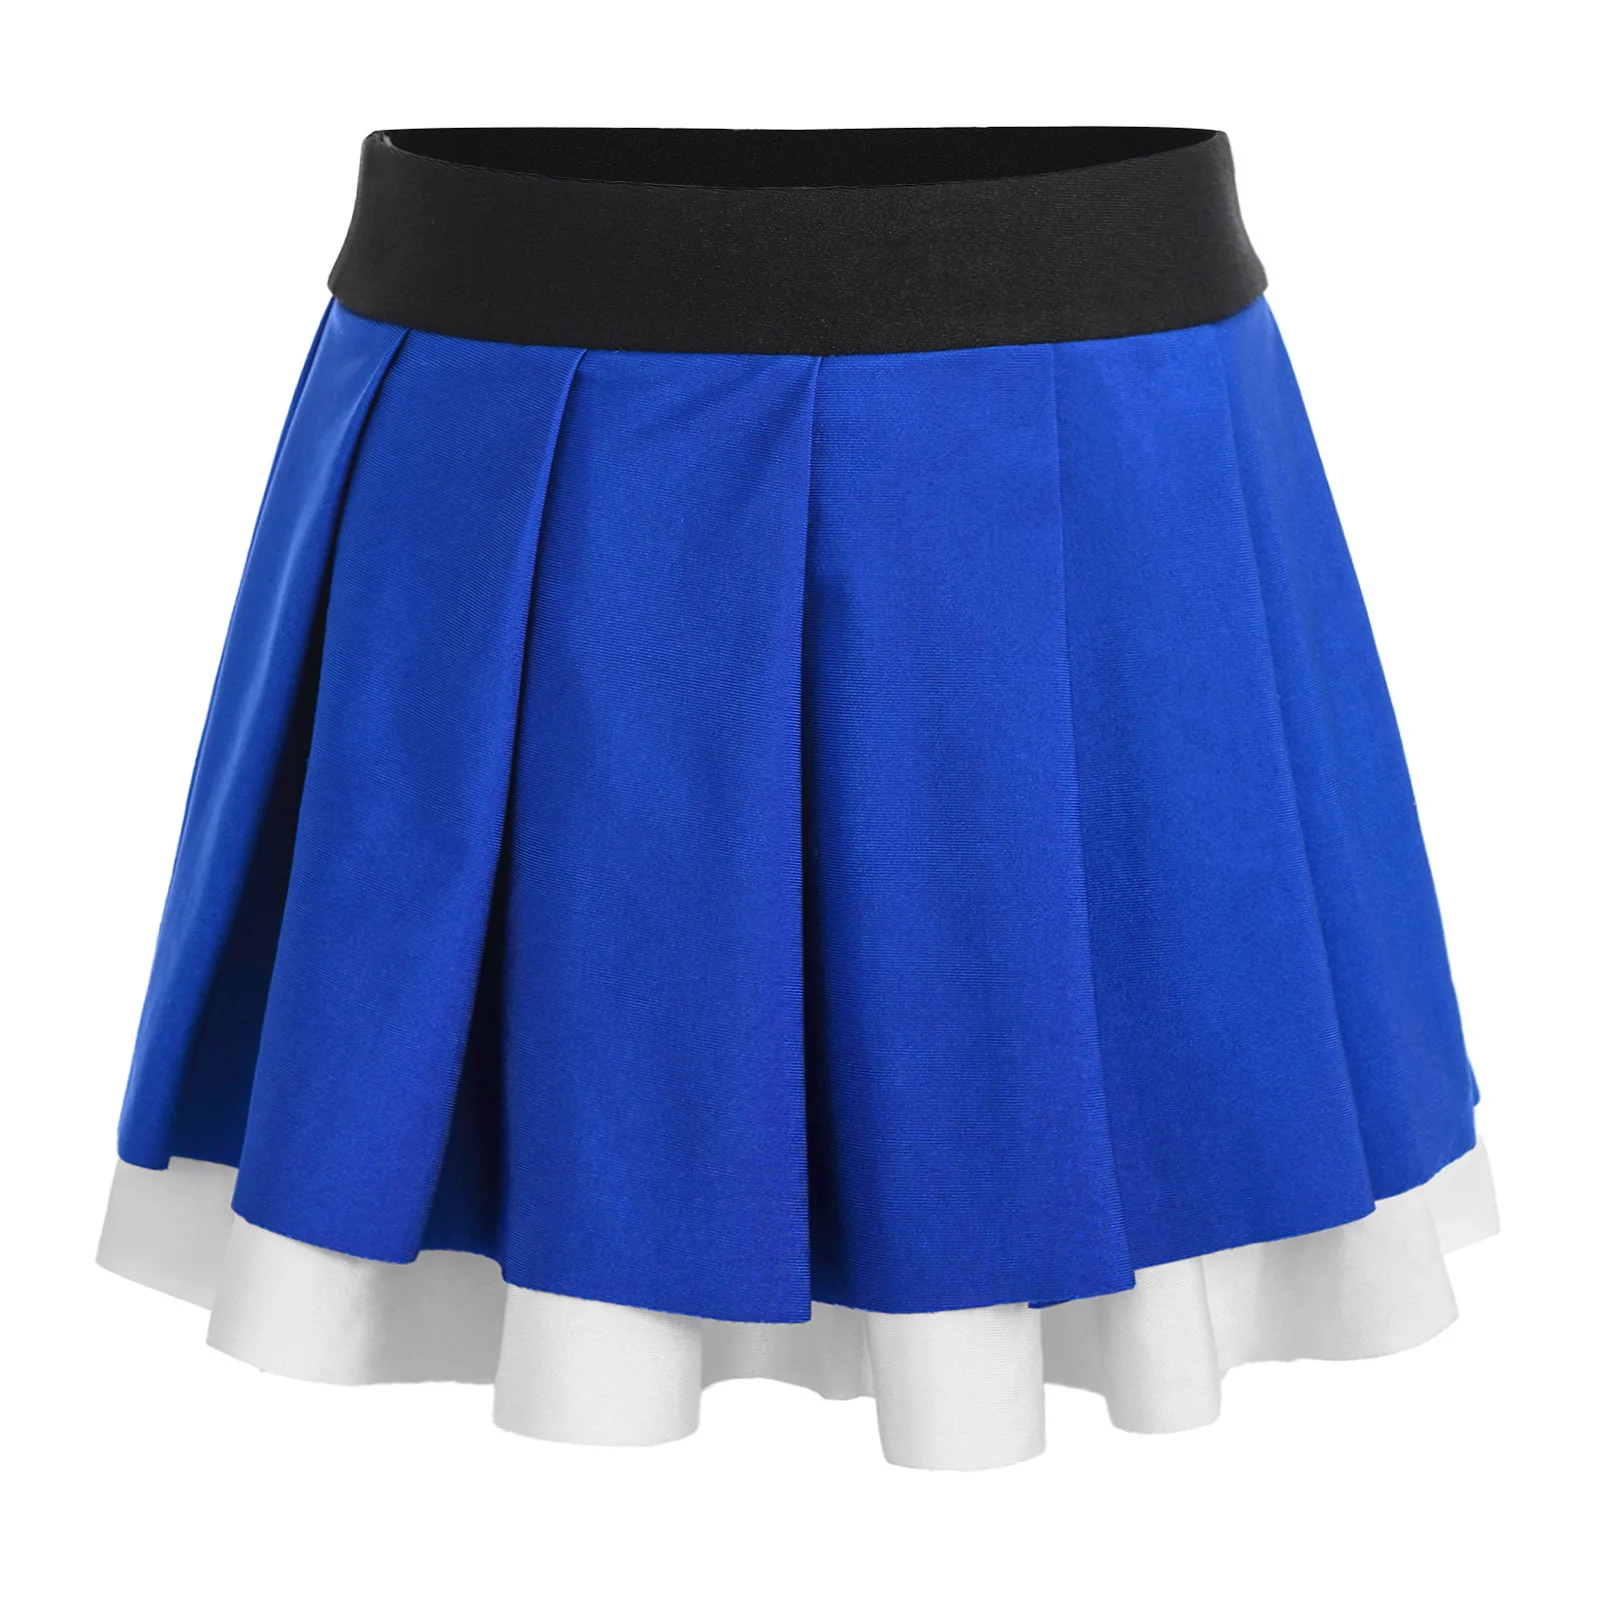 

Kids Girls Schoolgirls Uniform Skirts Contrast Color Elastic Waistband Two Layers Pleated Skirt Cheerleading Dance Performance